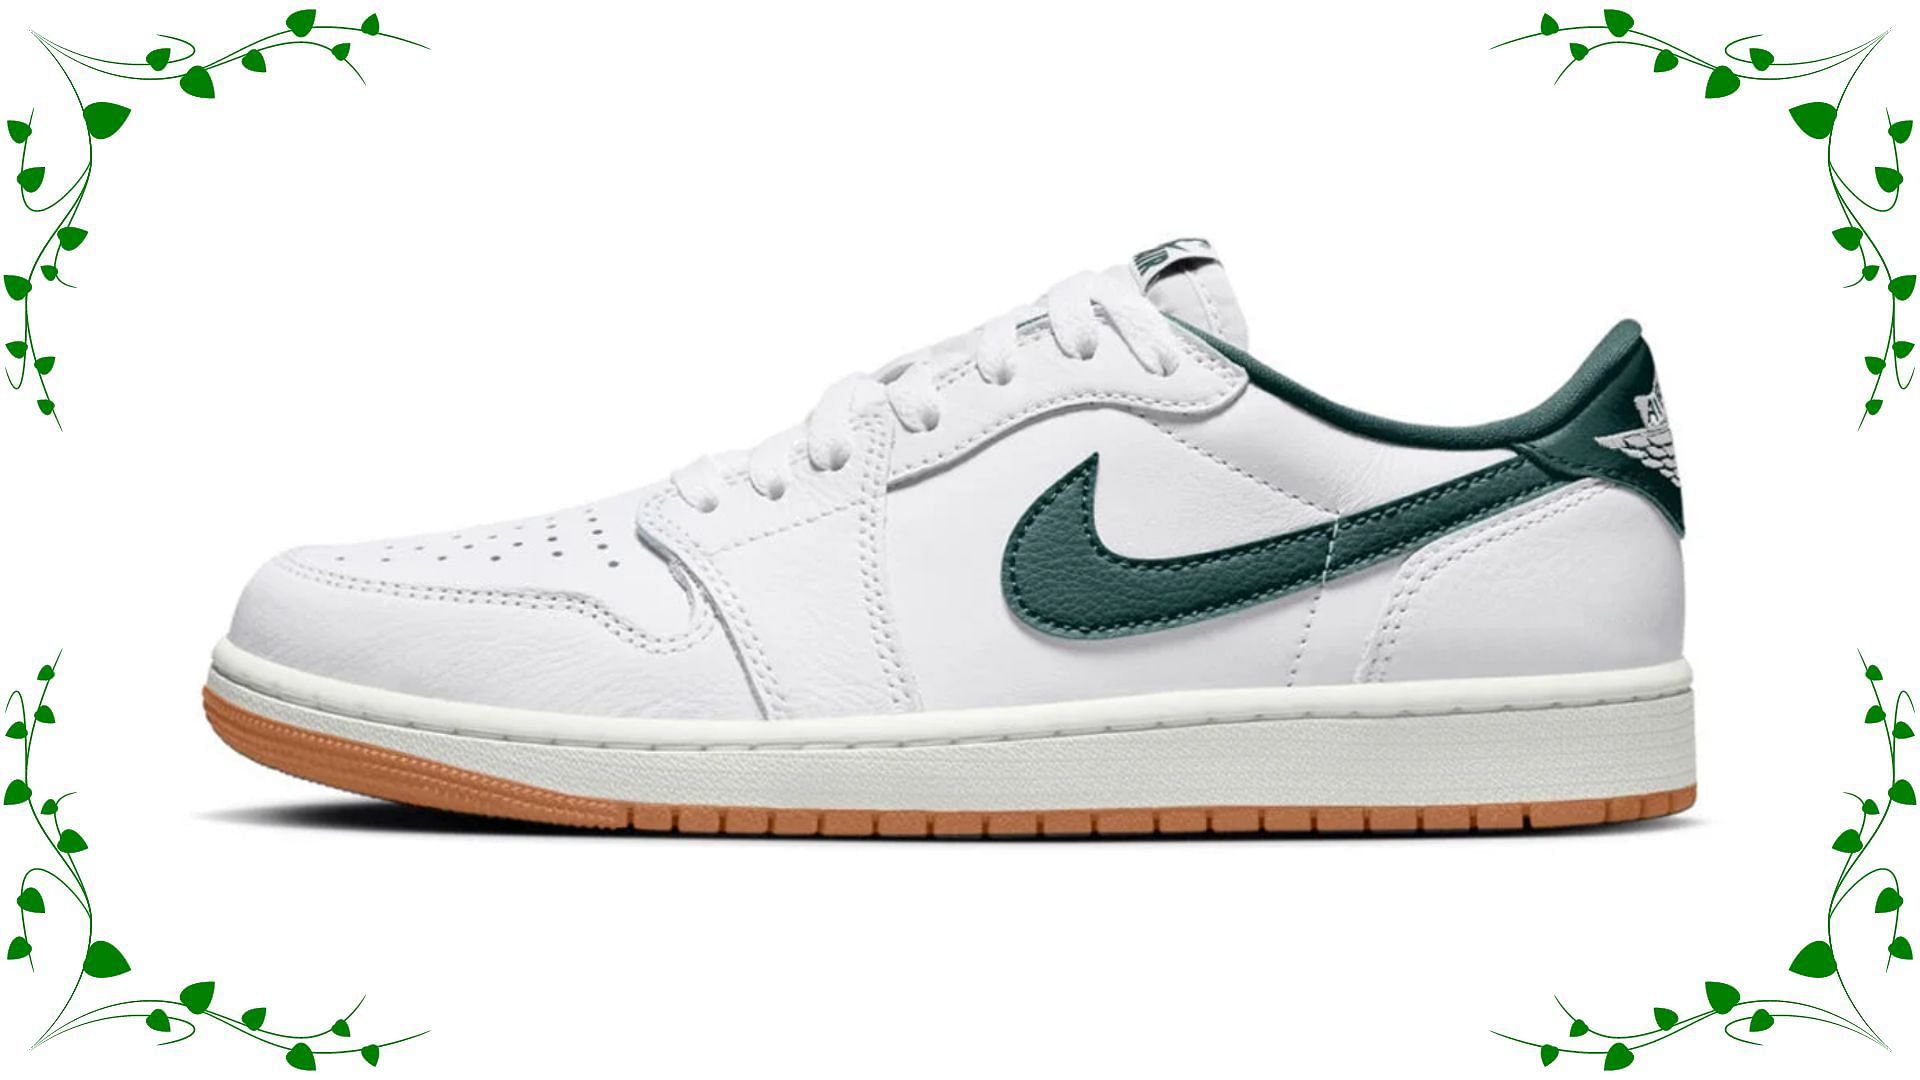 Air Jordan 1 Low Oxidized Green shoes (Image via Instagram/@sneakerfiles)